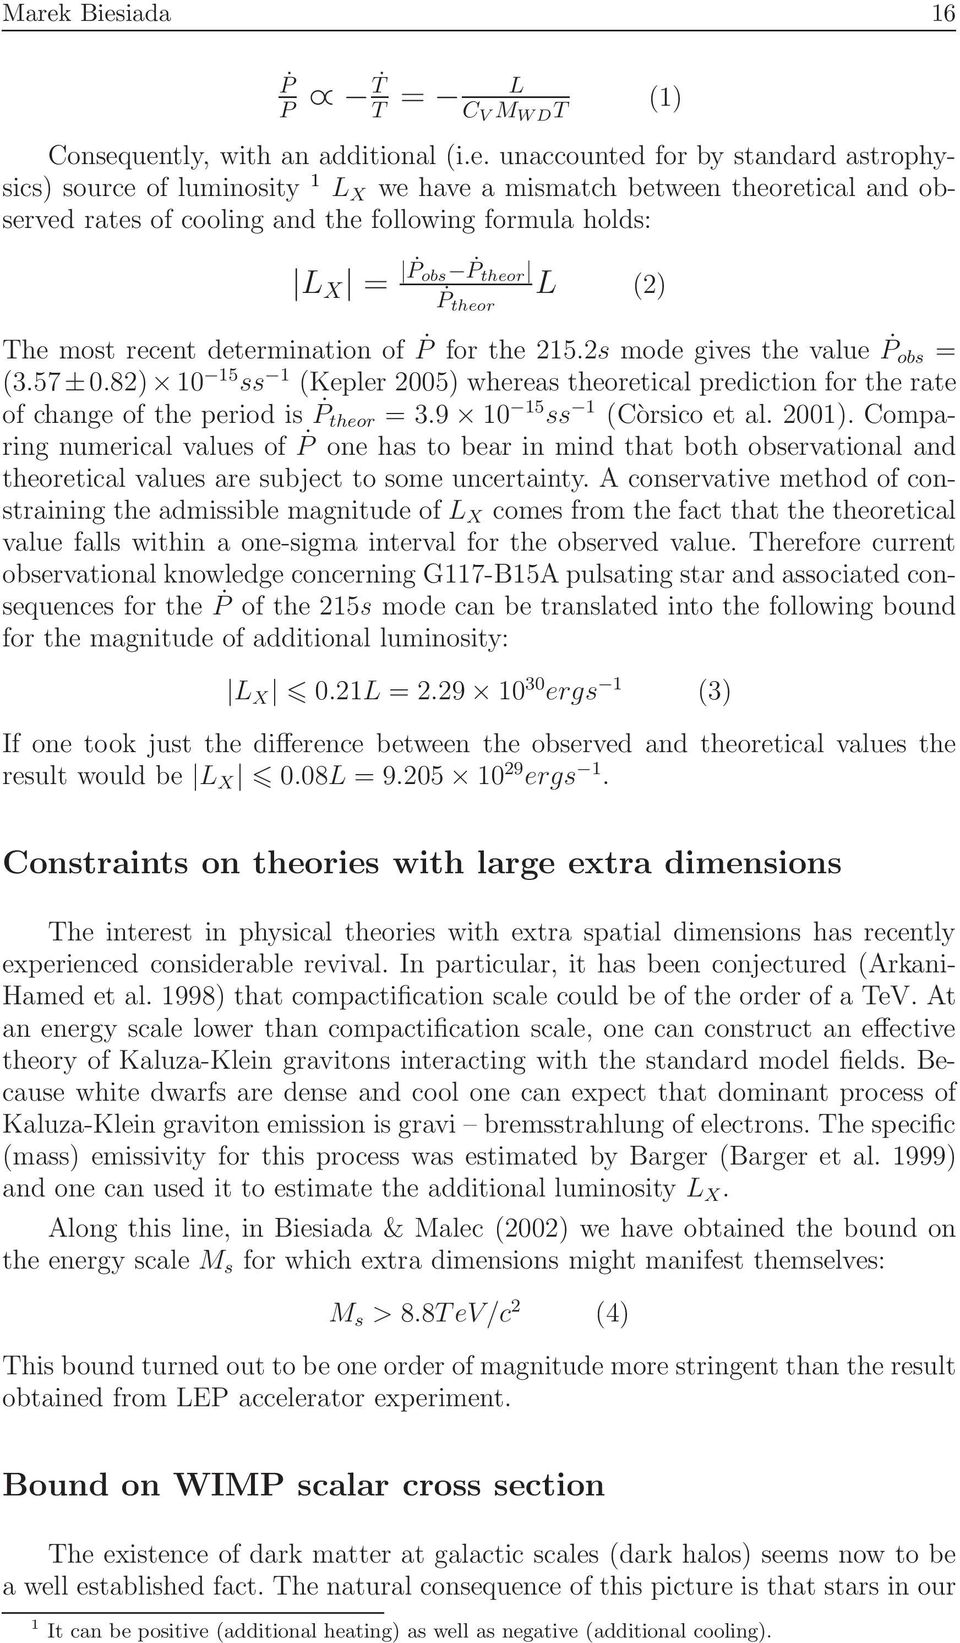 82) 10 15 ss 1 (Kepler2005)whereastheoreticalpredictionfortherate ofchangeoftheperiodisp theor =3.9 10 15 ss 1 (Còrsicoetal.2001).